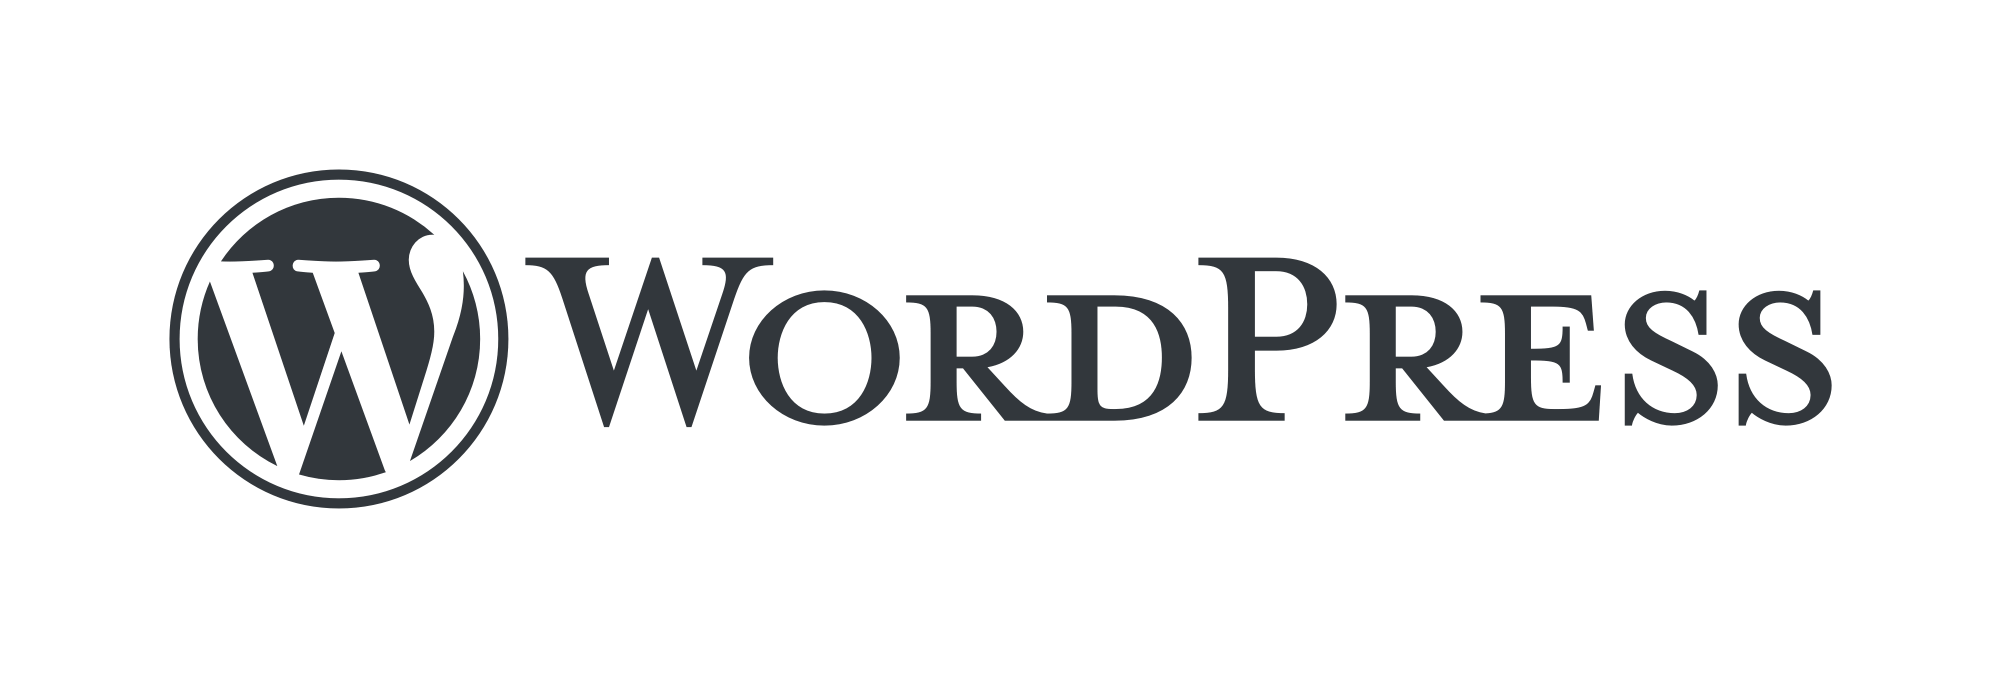 WordPress SEO - Betreuung, Analyse, Optimierung